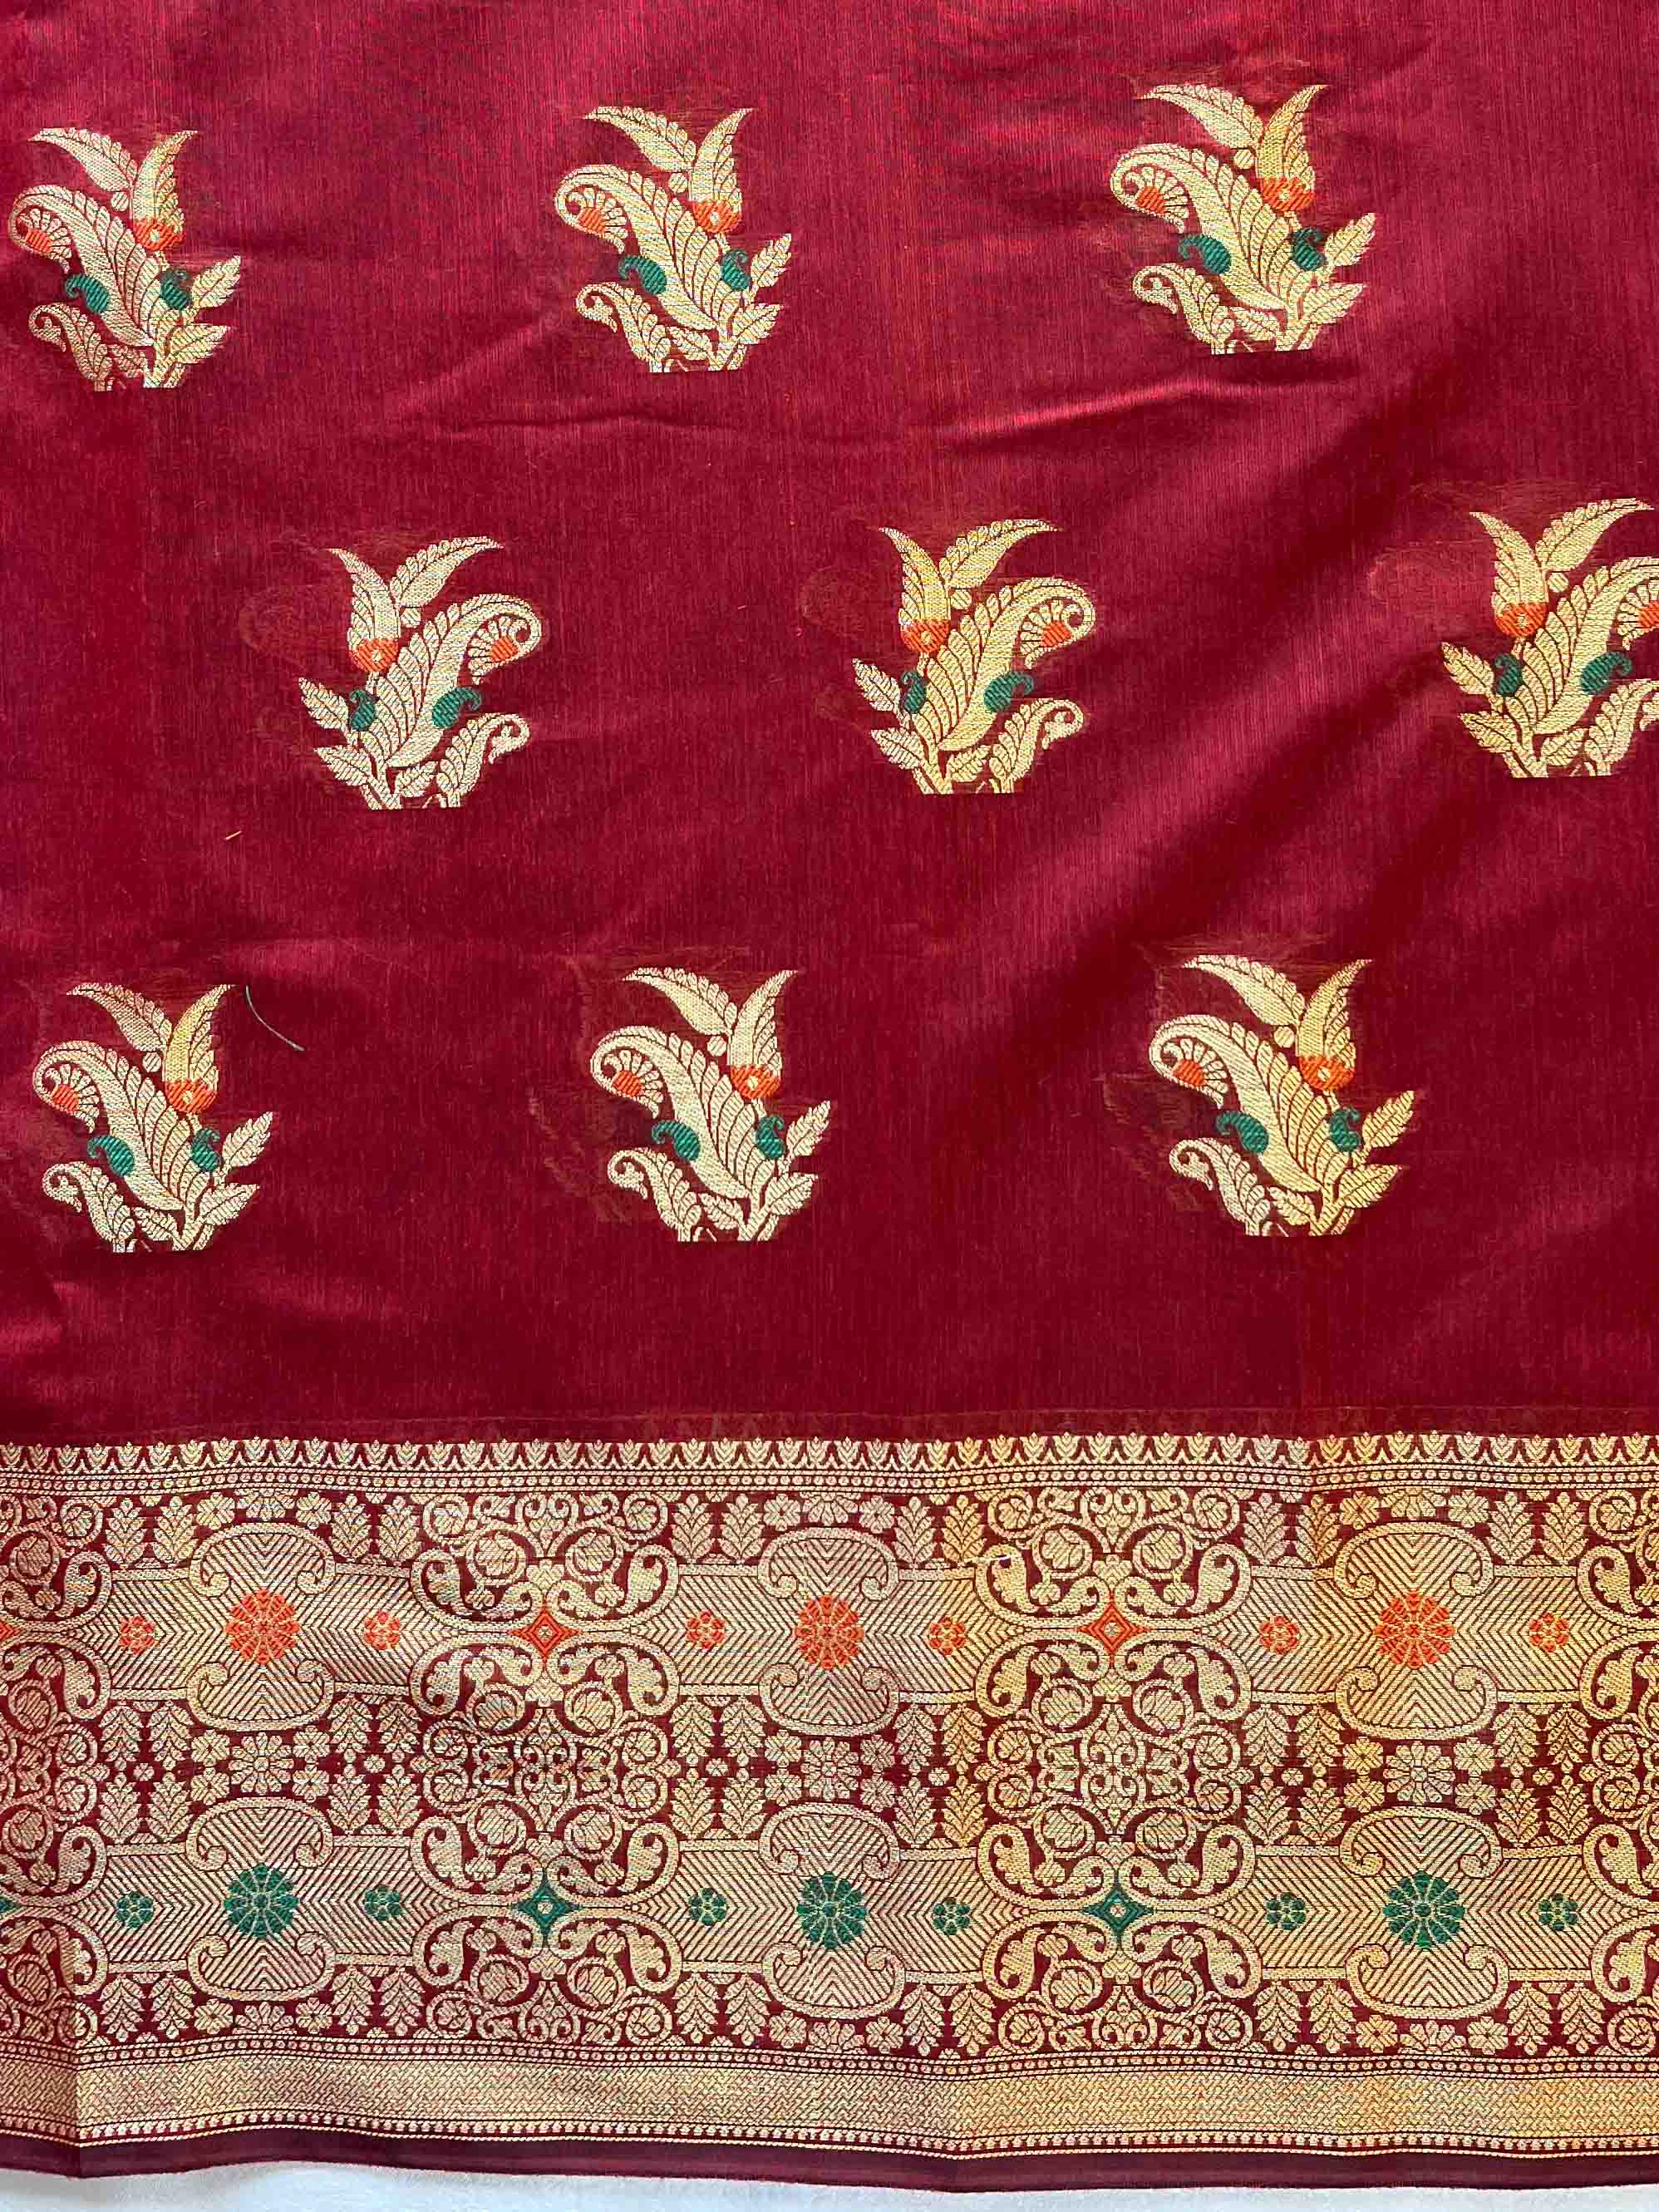 Banarasee Chanderi Cotton Salwar Kameez Fabric With Dupatta Zari Buta Design- Maroon